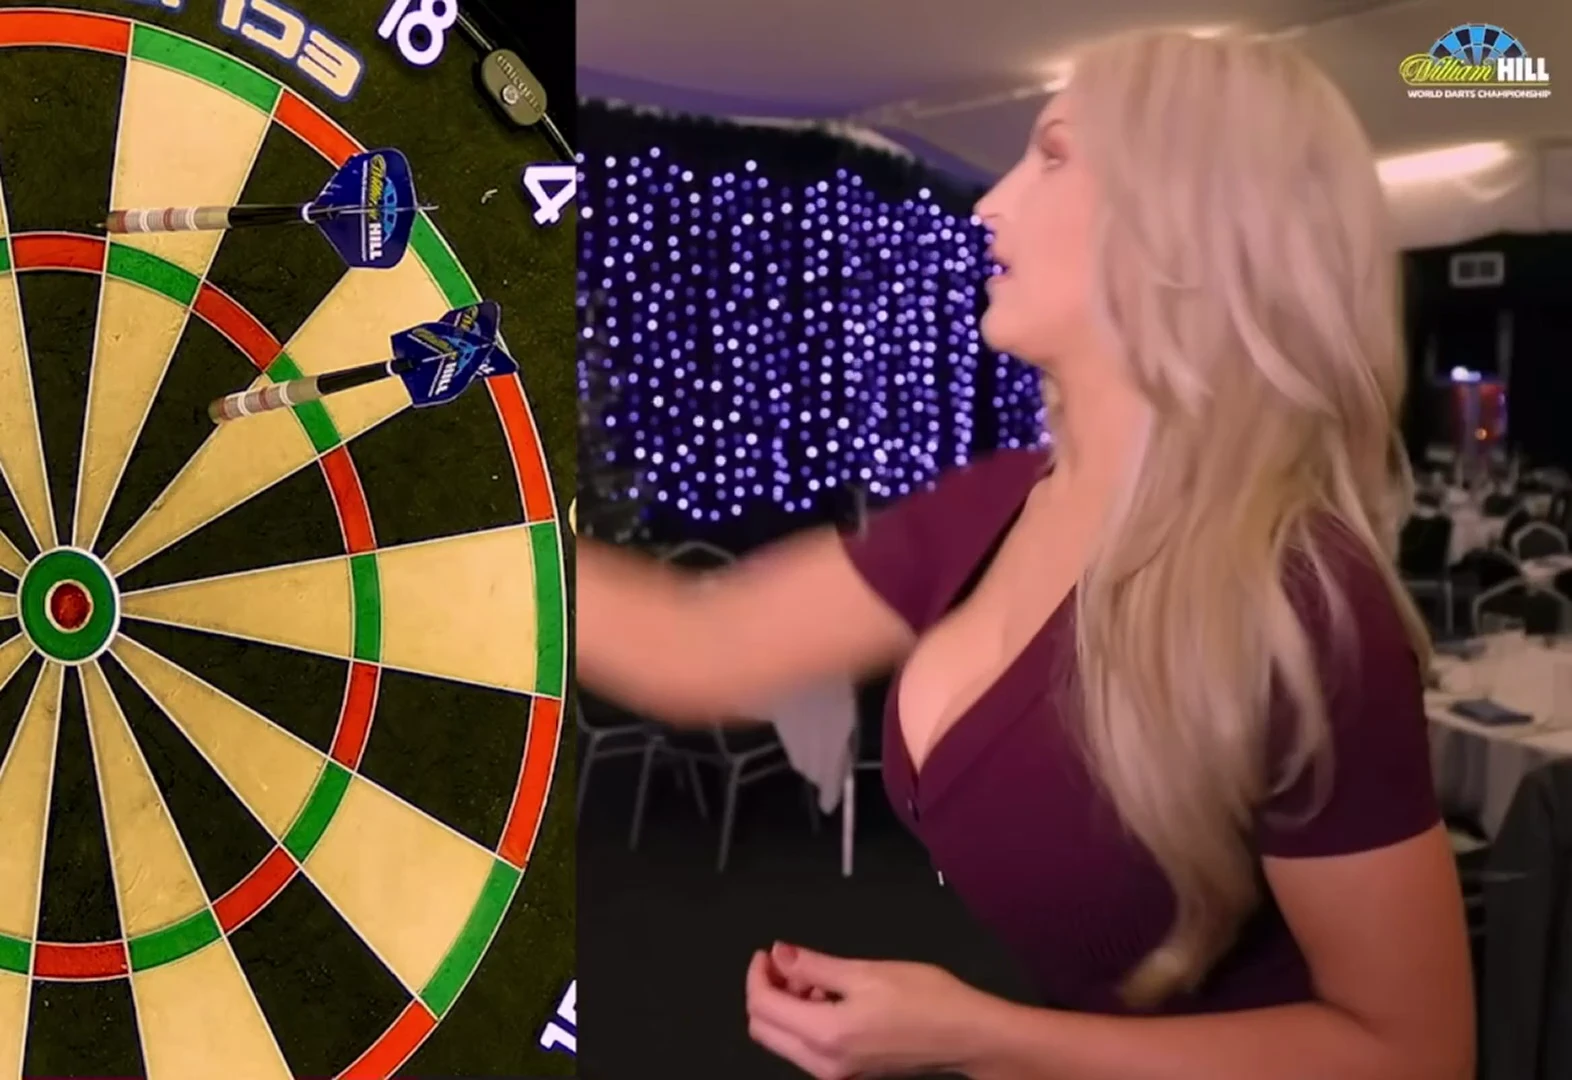 Big titty bimbo learns how to play darts